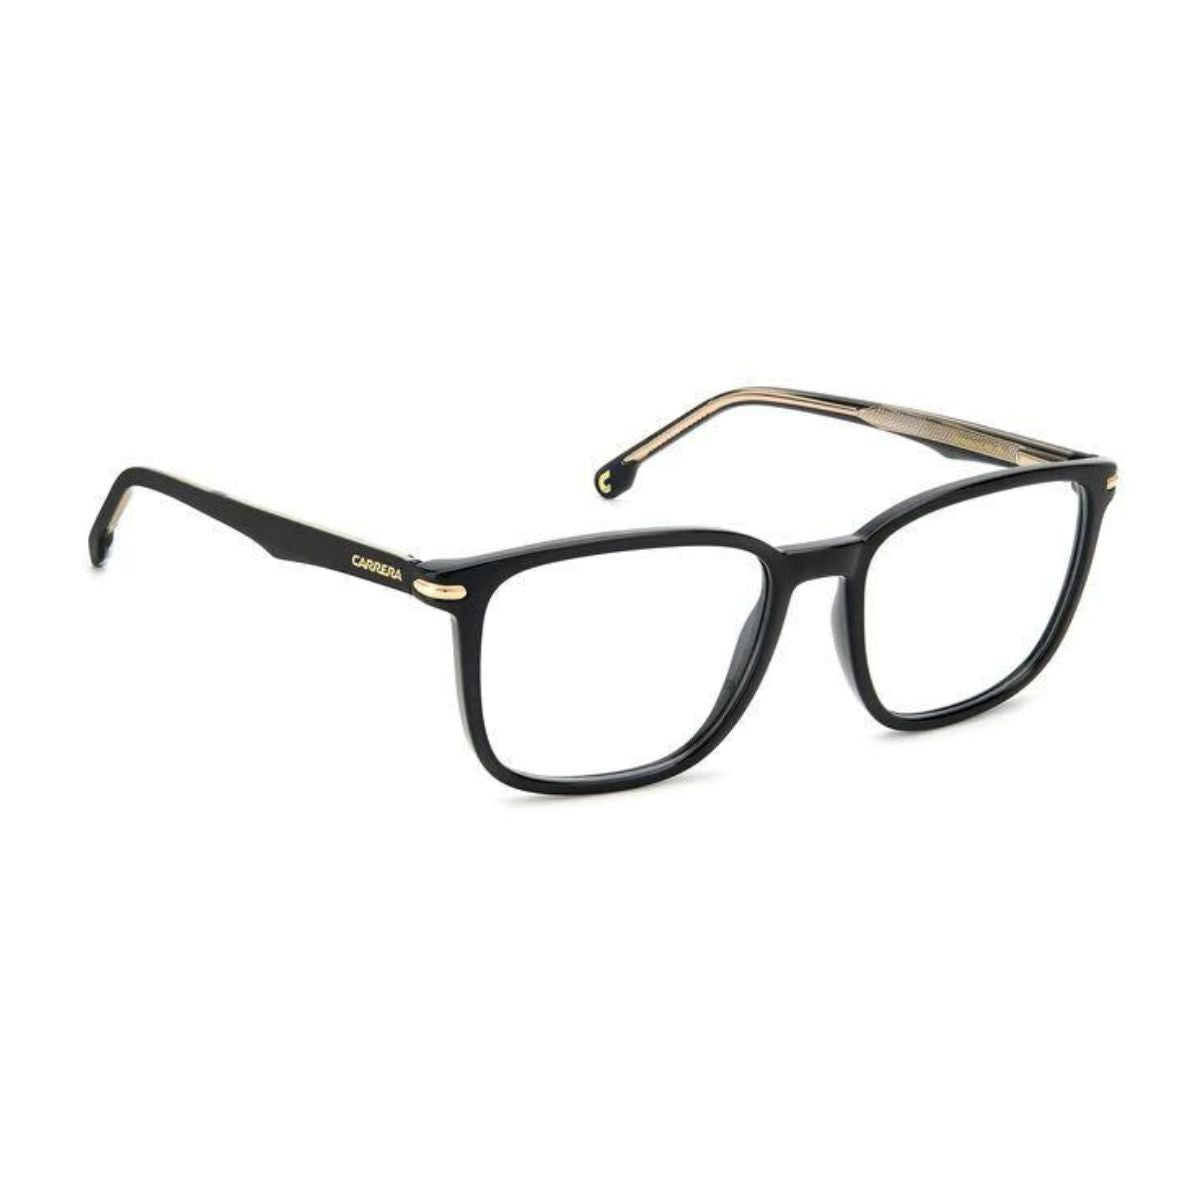 "best Carrera 292 807 trendy eyewear frame for men's at optorium"